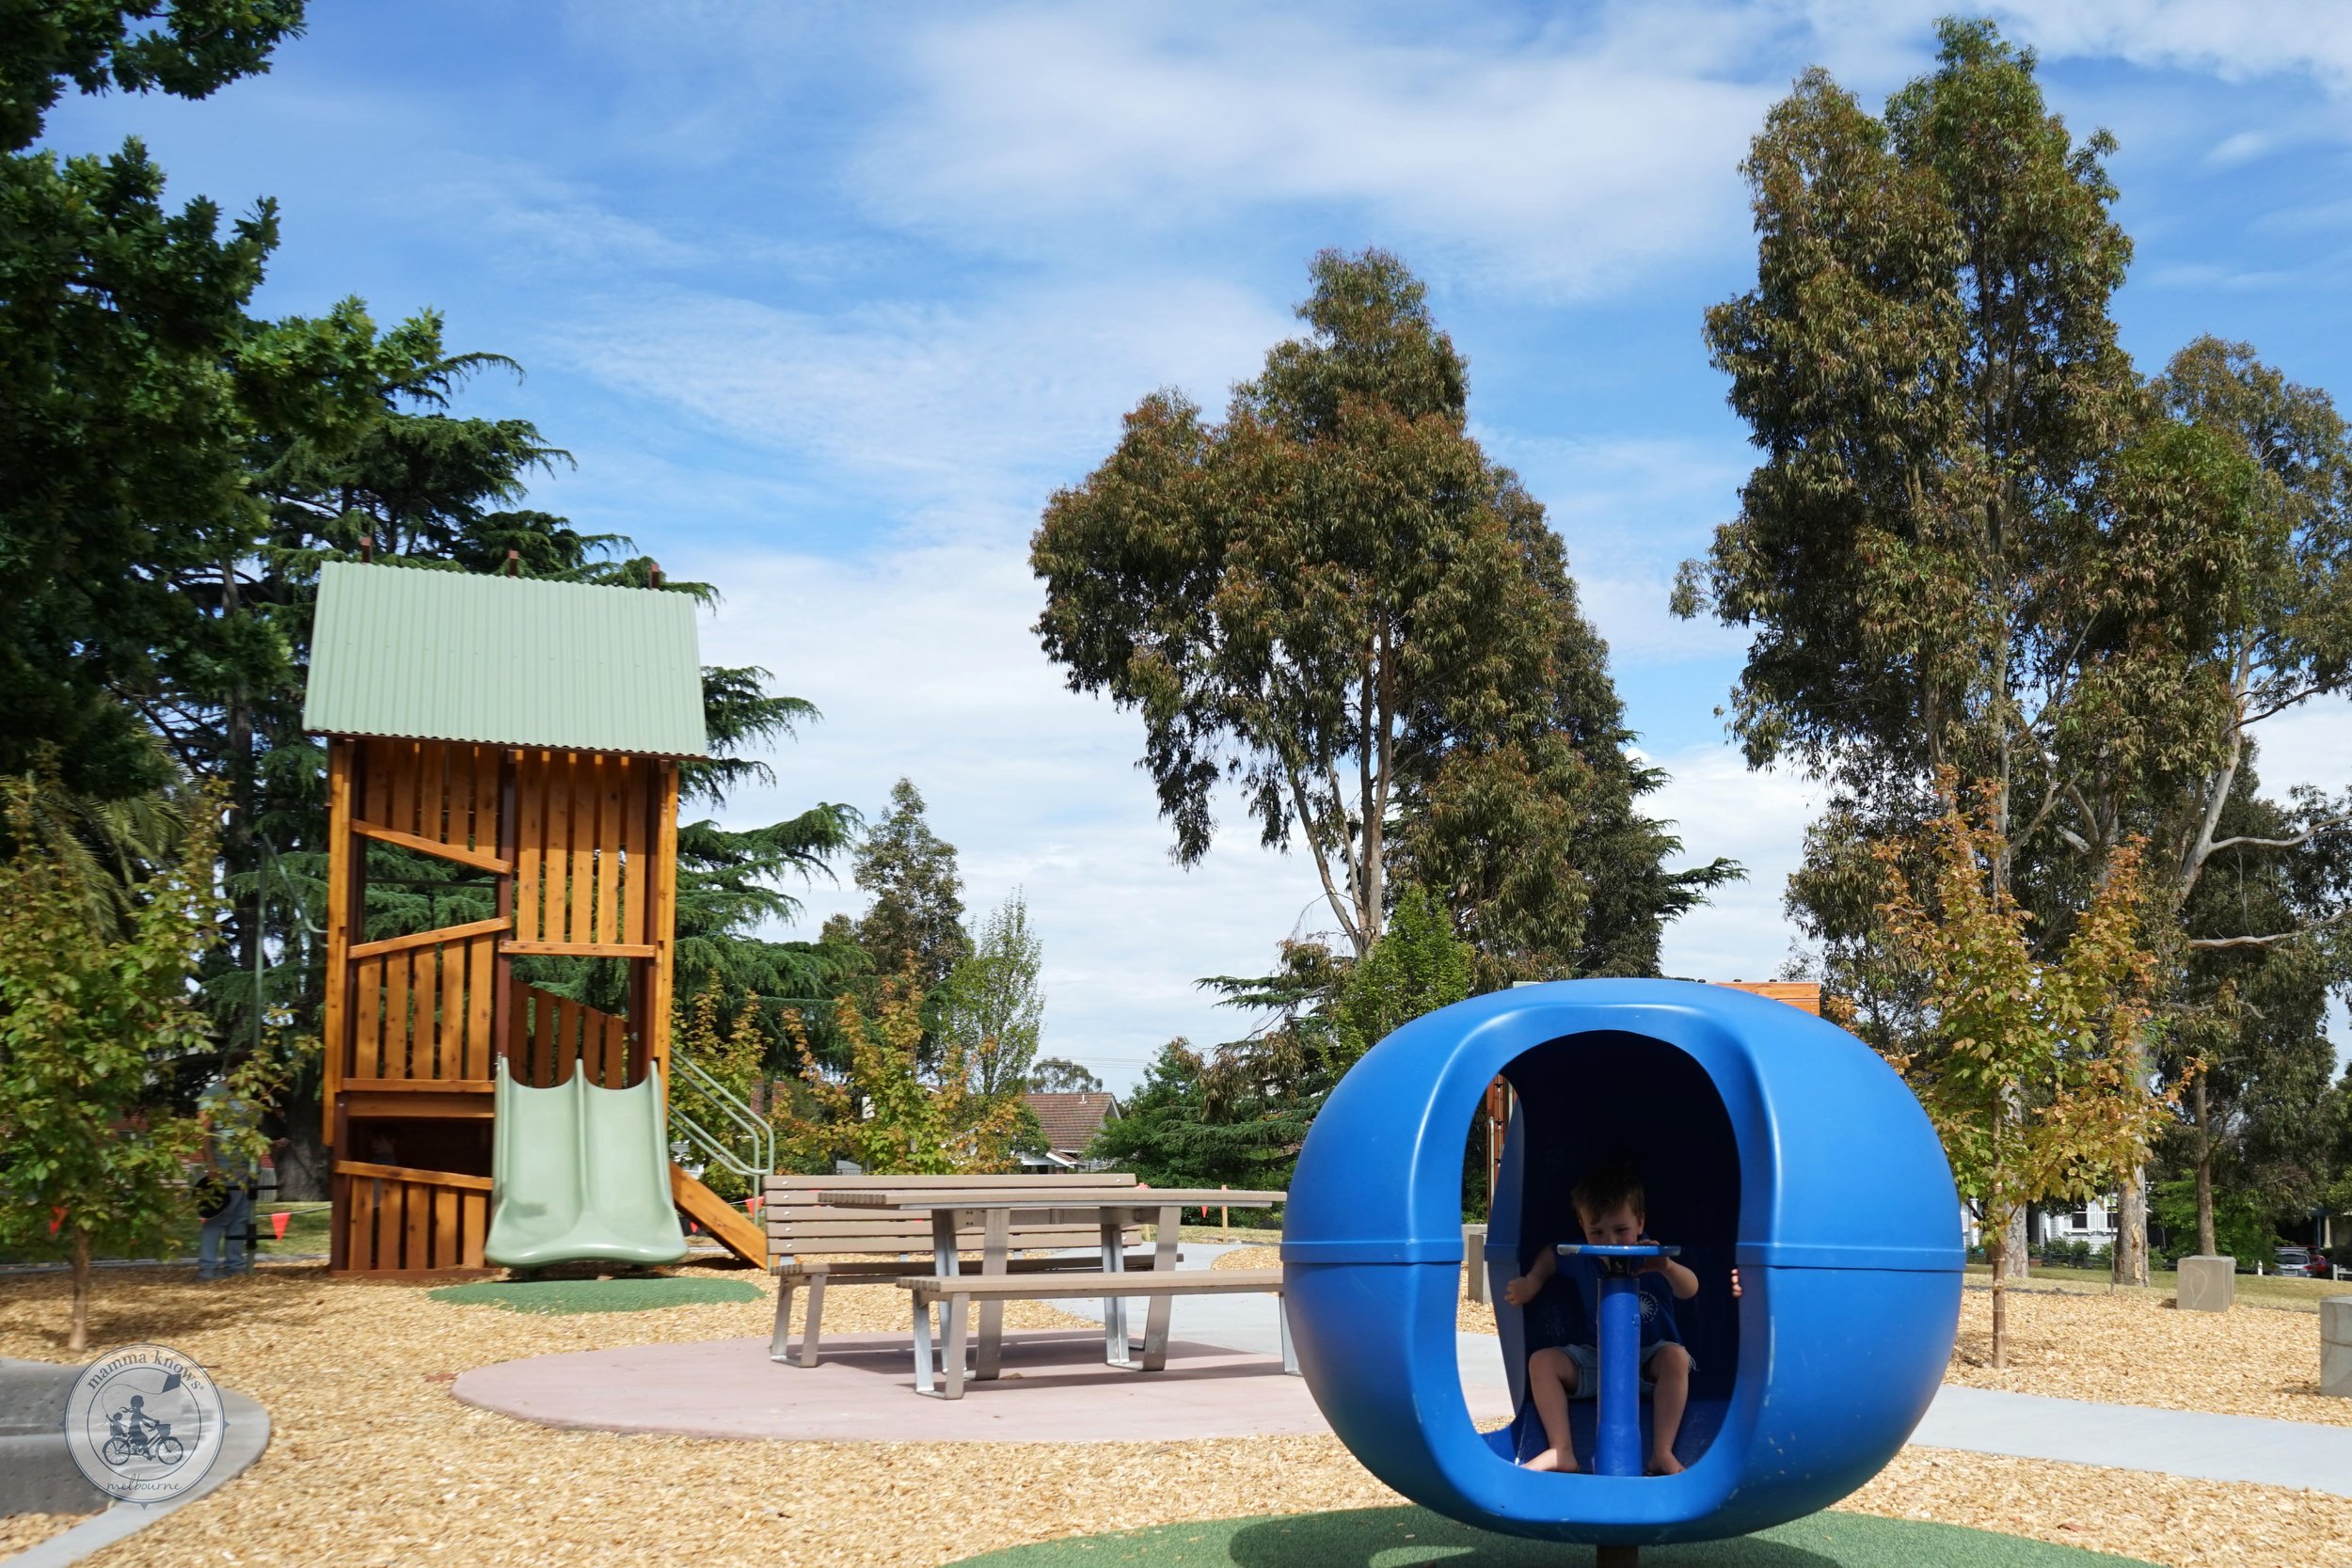 Grovedale Park Playground, Surrey Hills